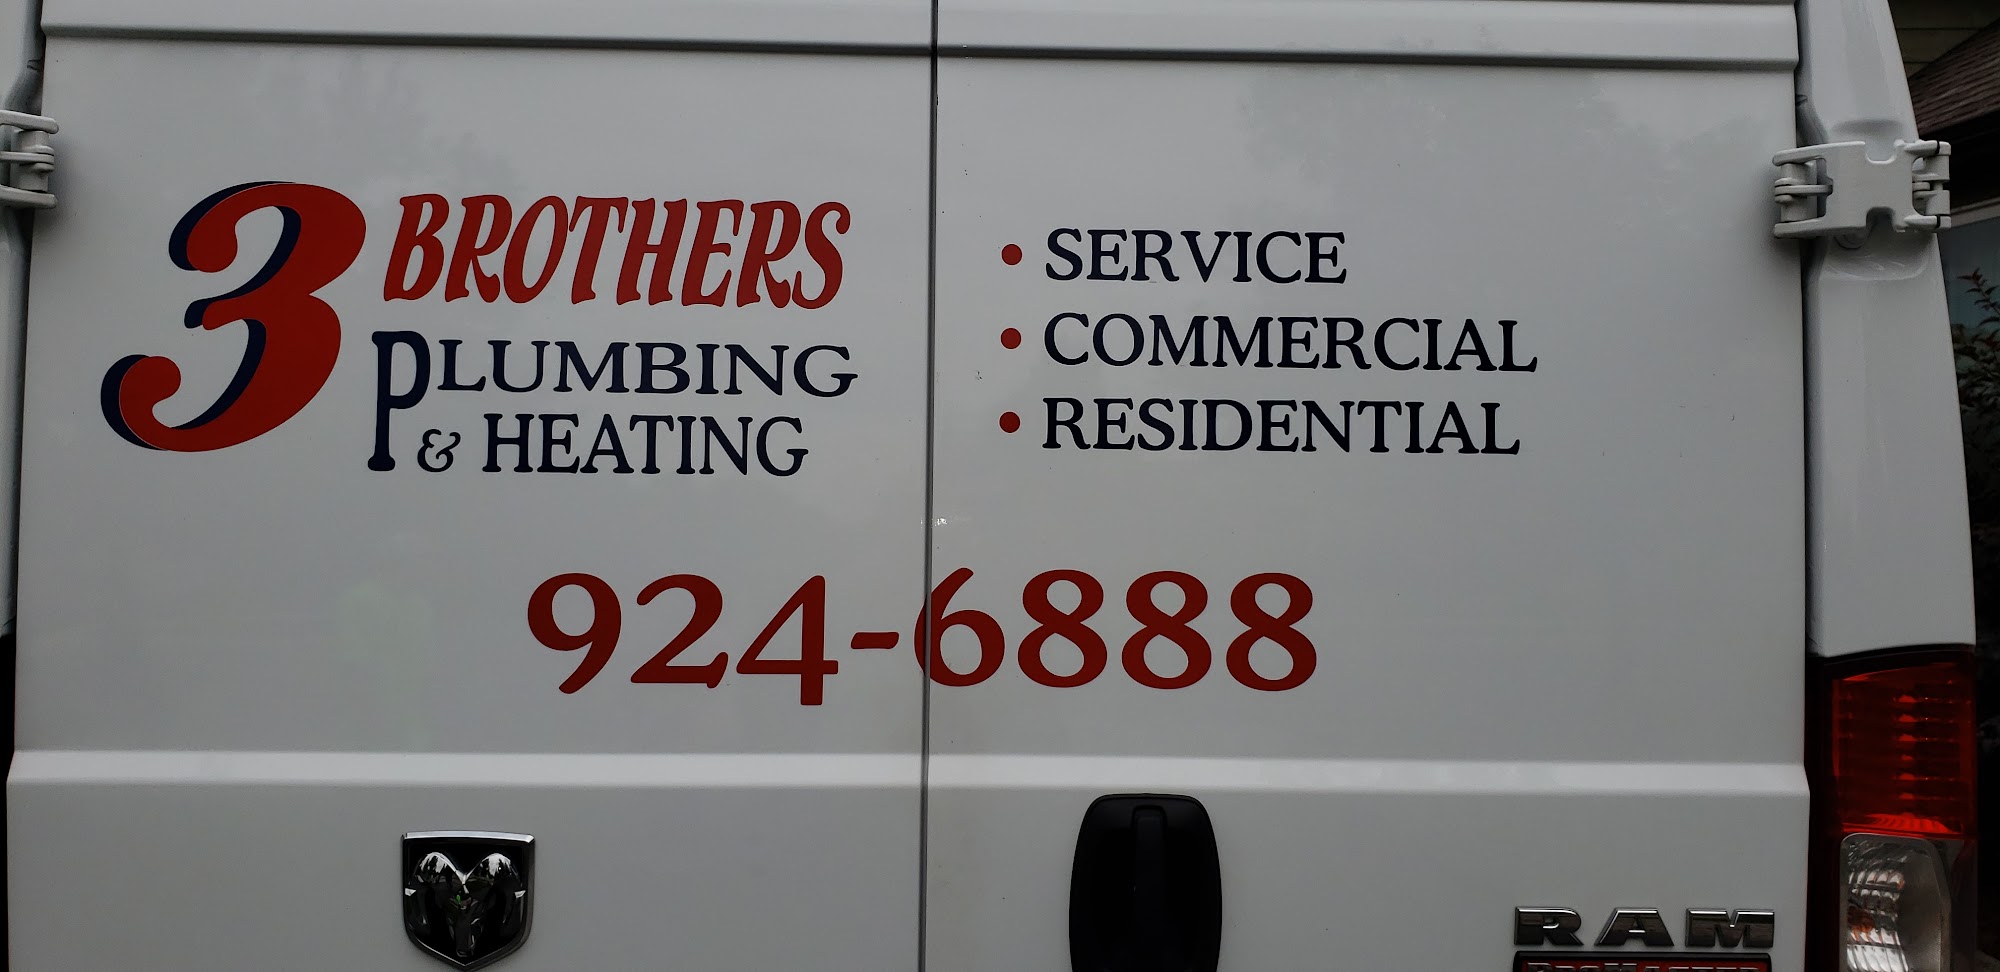 3 Brothers Plumbing & Heating 3 Virginia Road, Montana City Montana 59634